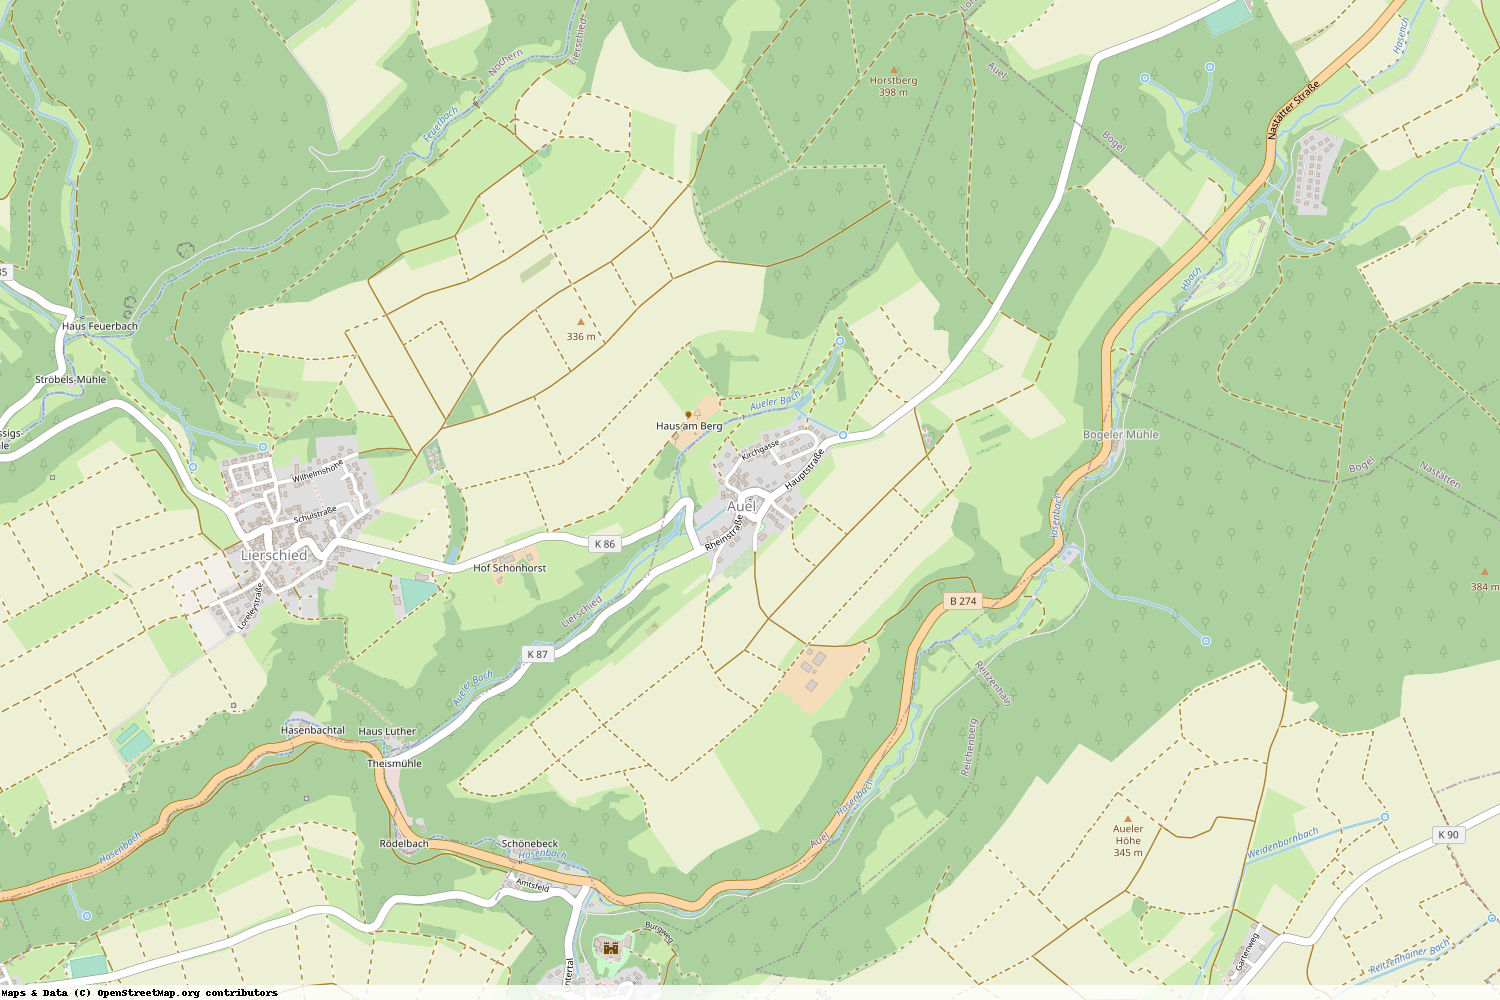 Ist gerade Stromausfall in Rheinland-Pfalz - Rhein-Lahn-Kreis - Auel?